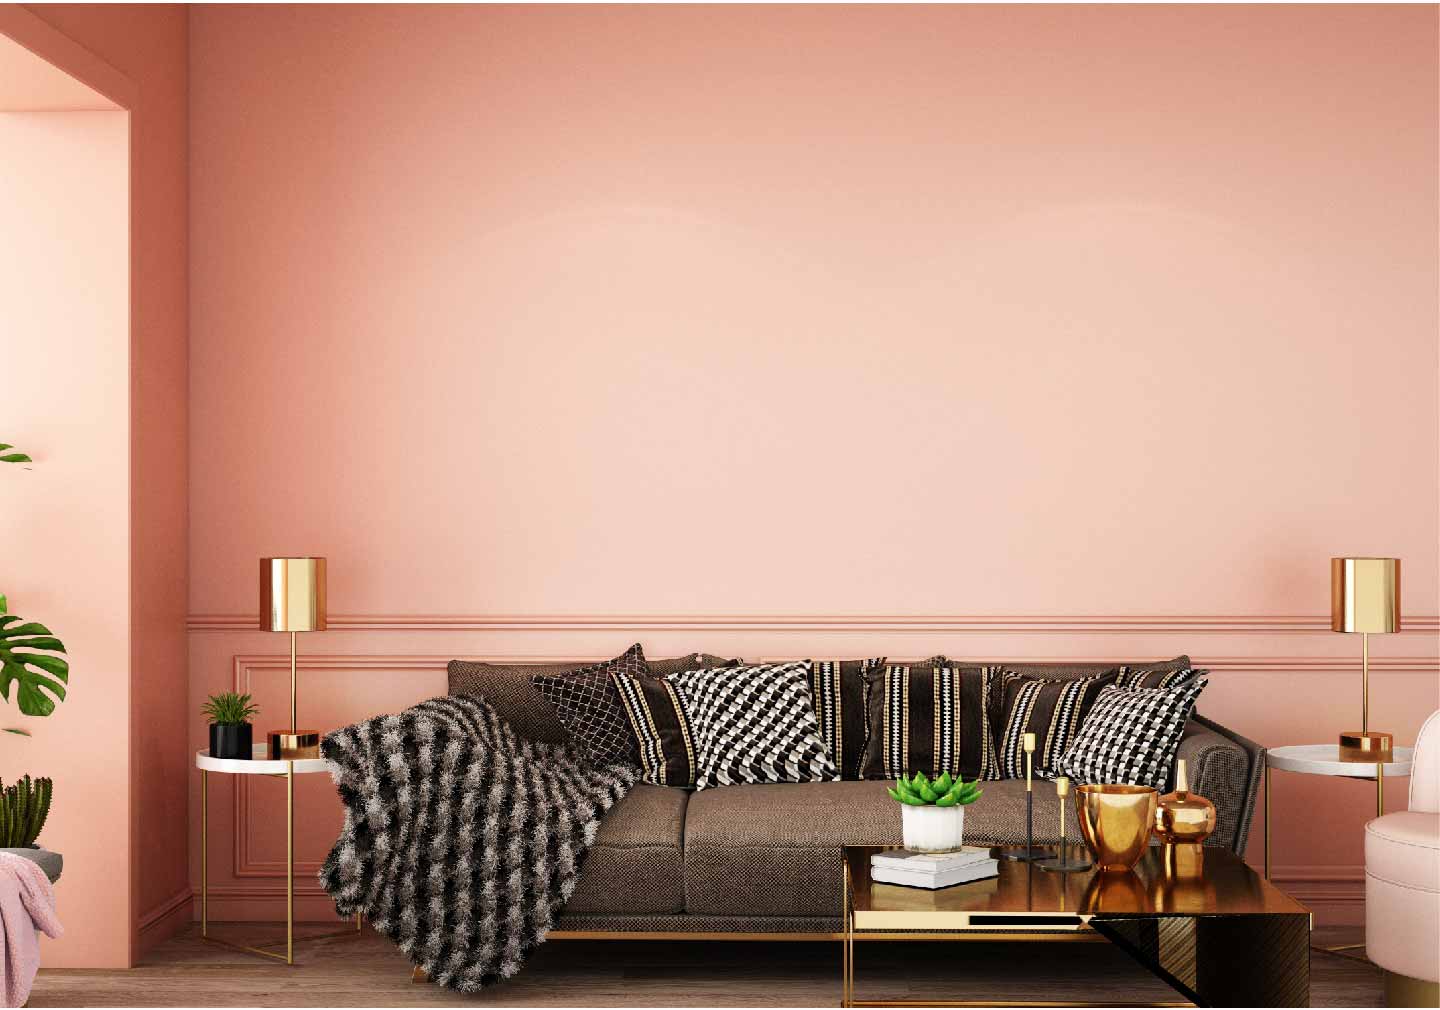 A living room sofa to elevate your interior designs moods